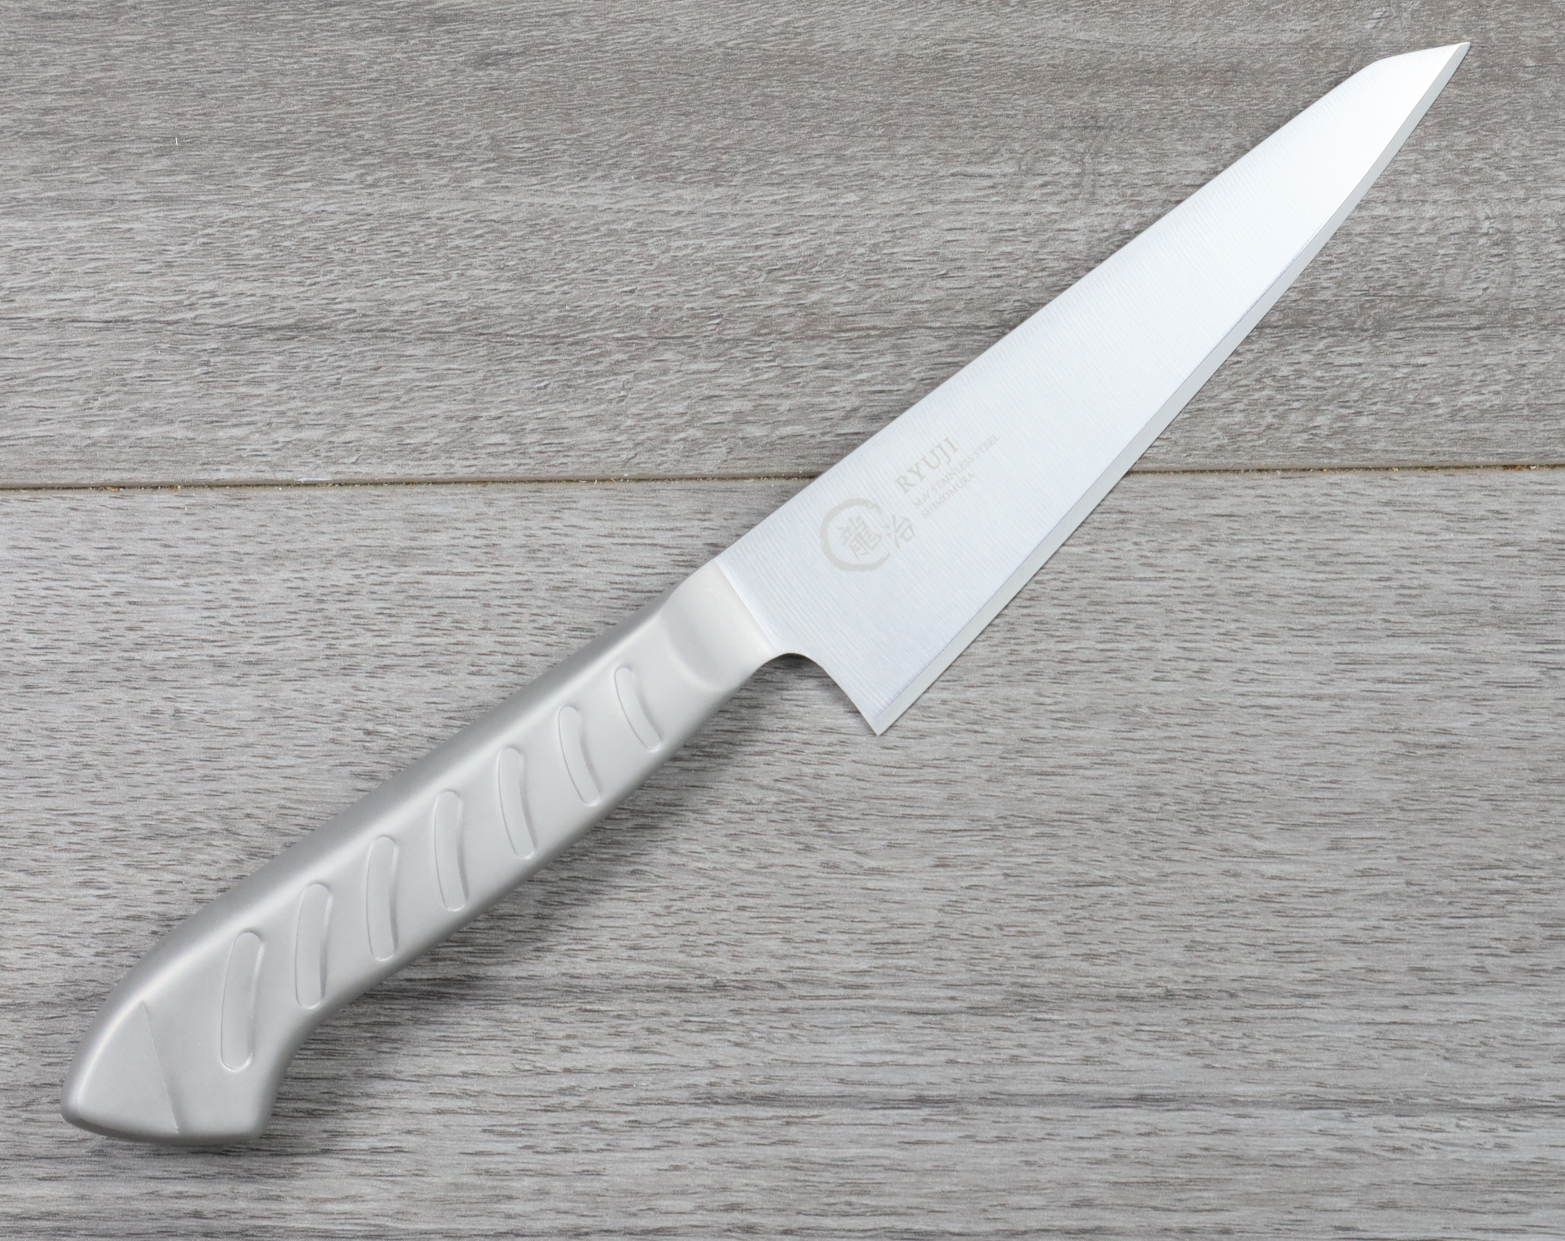 Ryuji All Stainless-Steel Honesuki (Boning/Utility) Knife 150mm